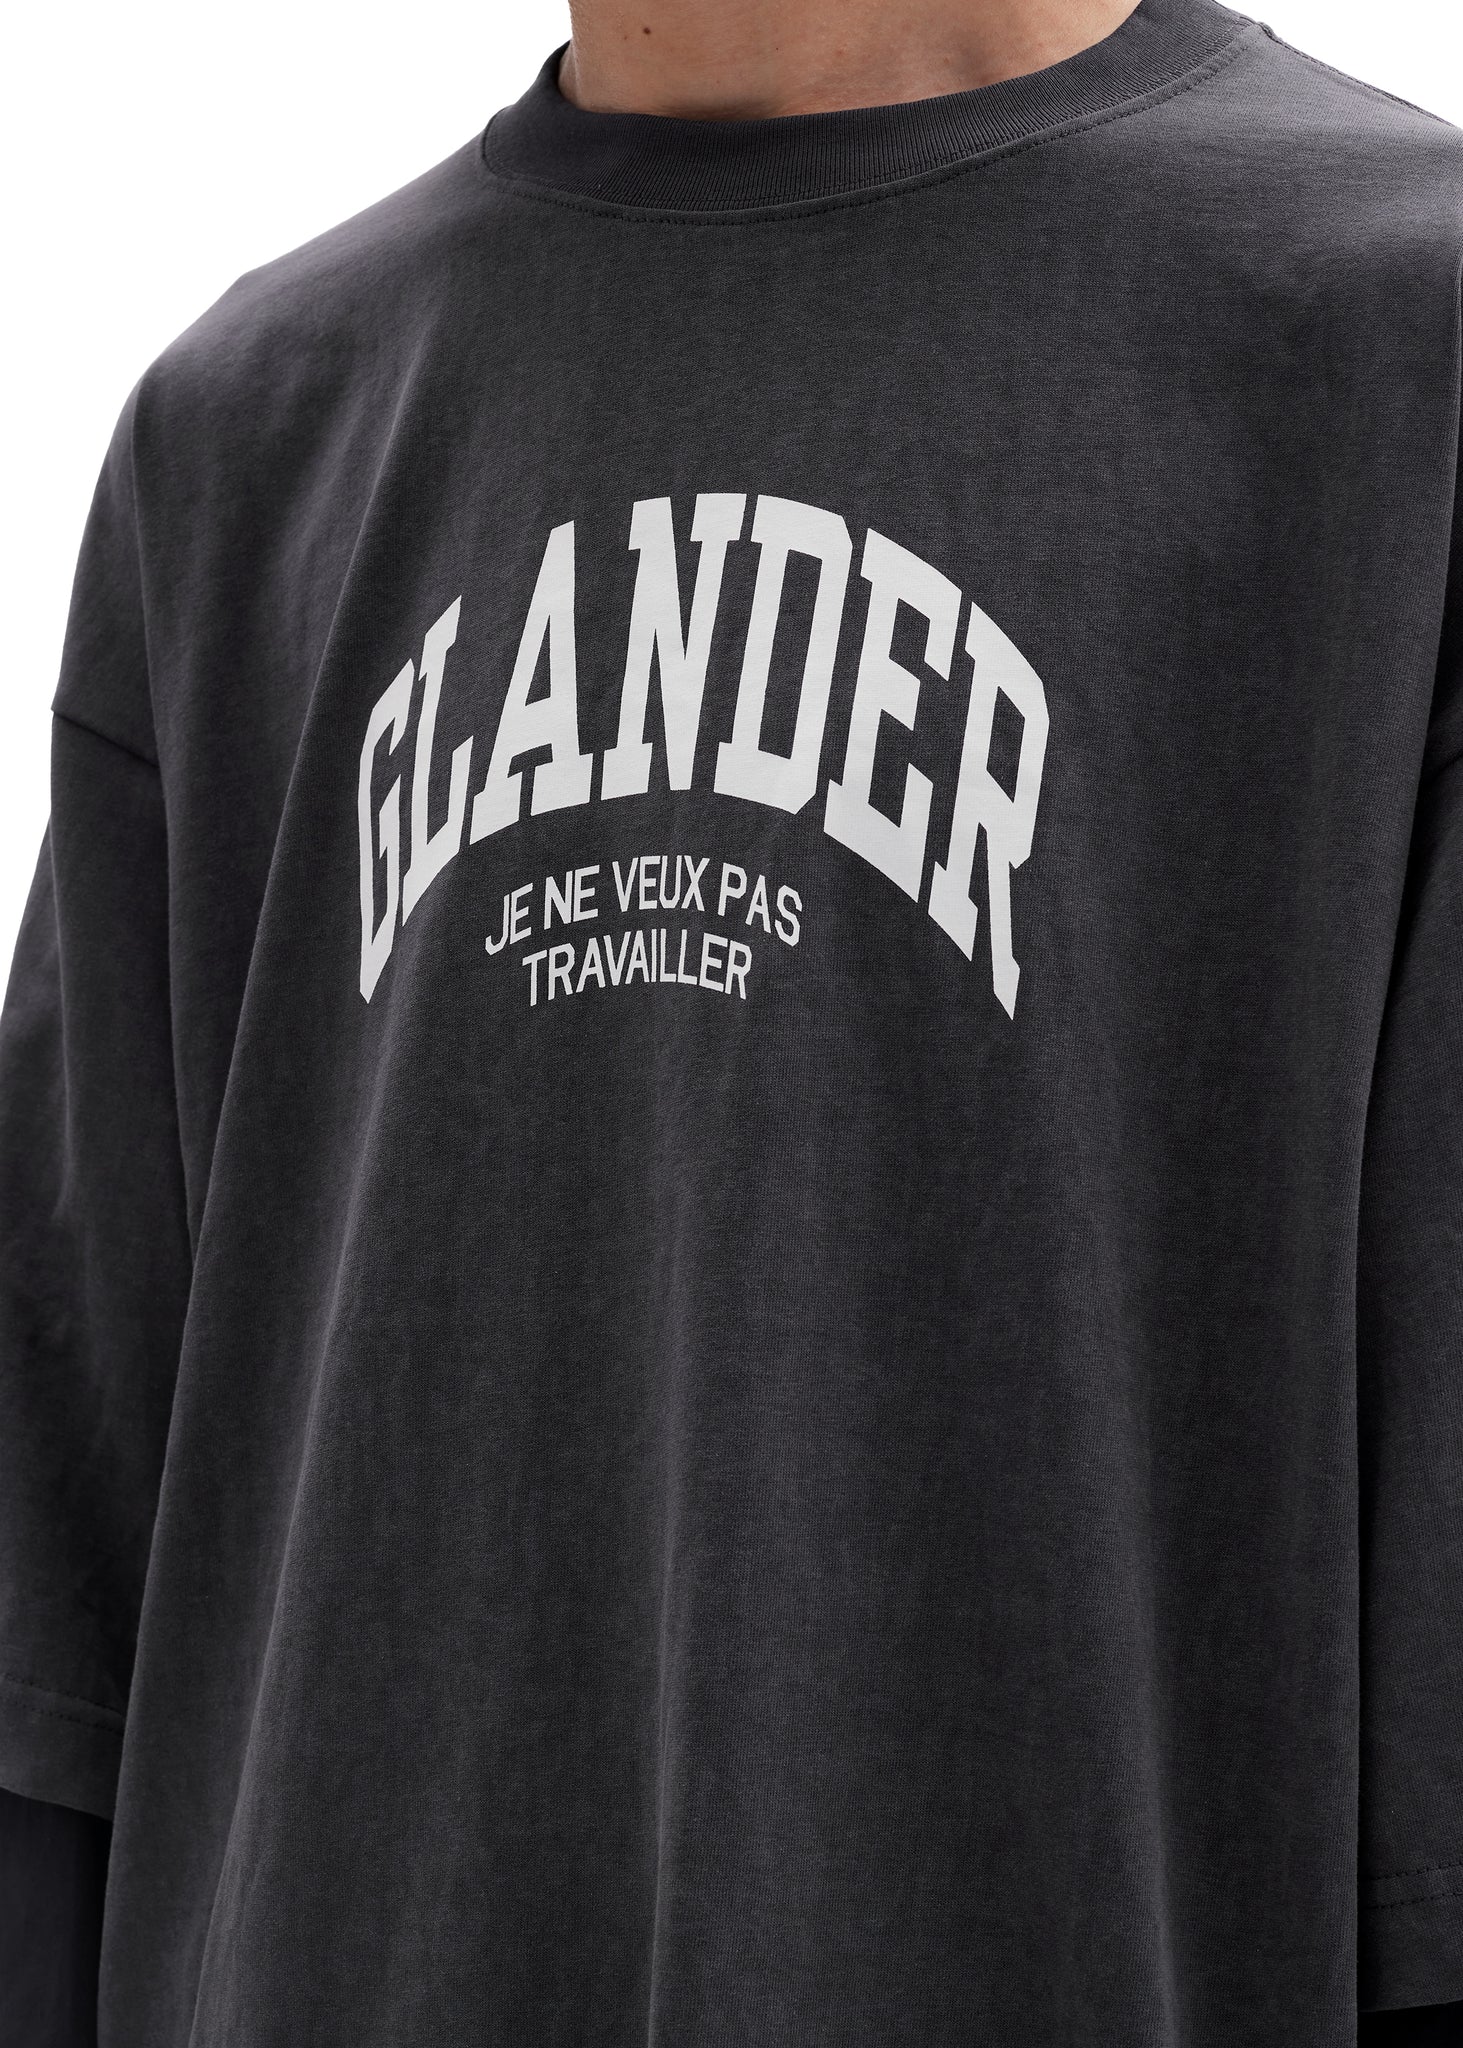 X2 Sleeve Shirt - "Glander"